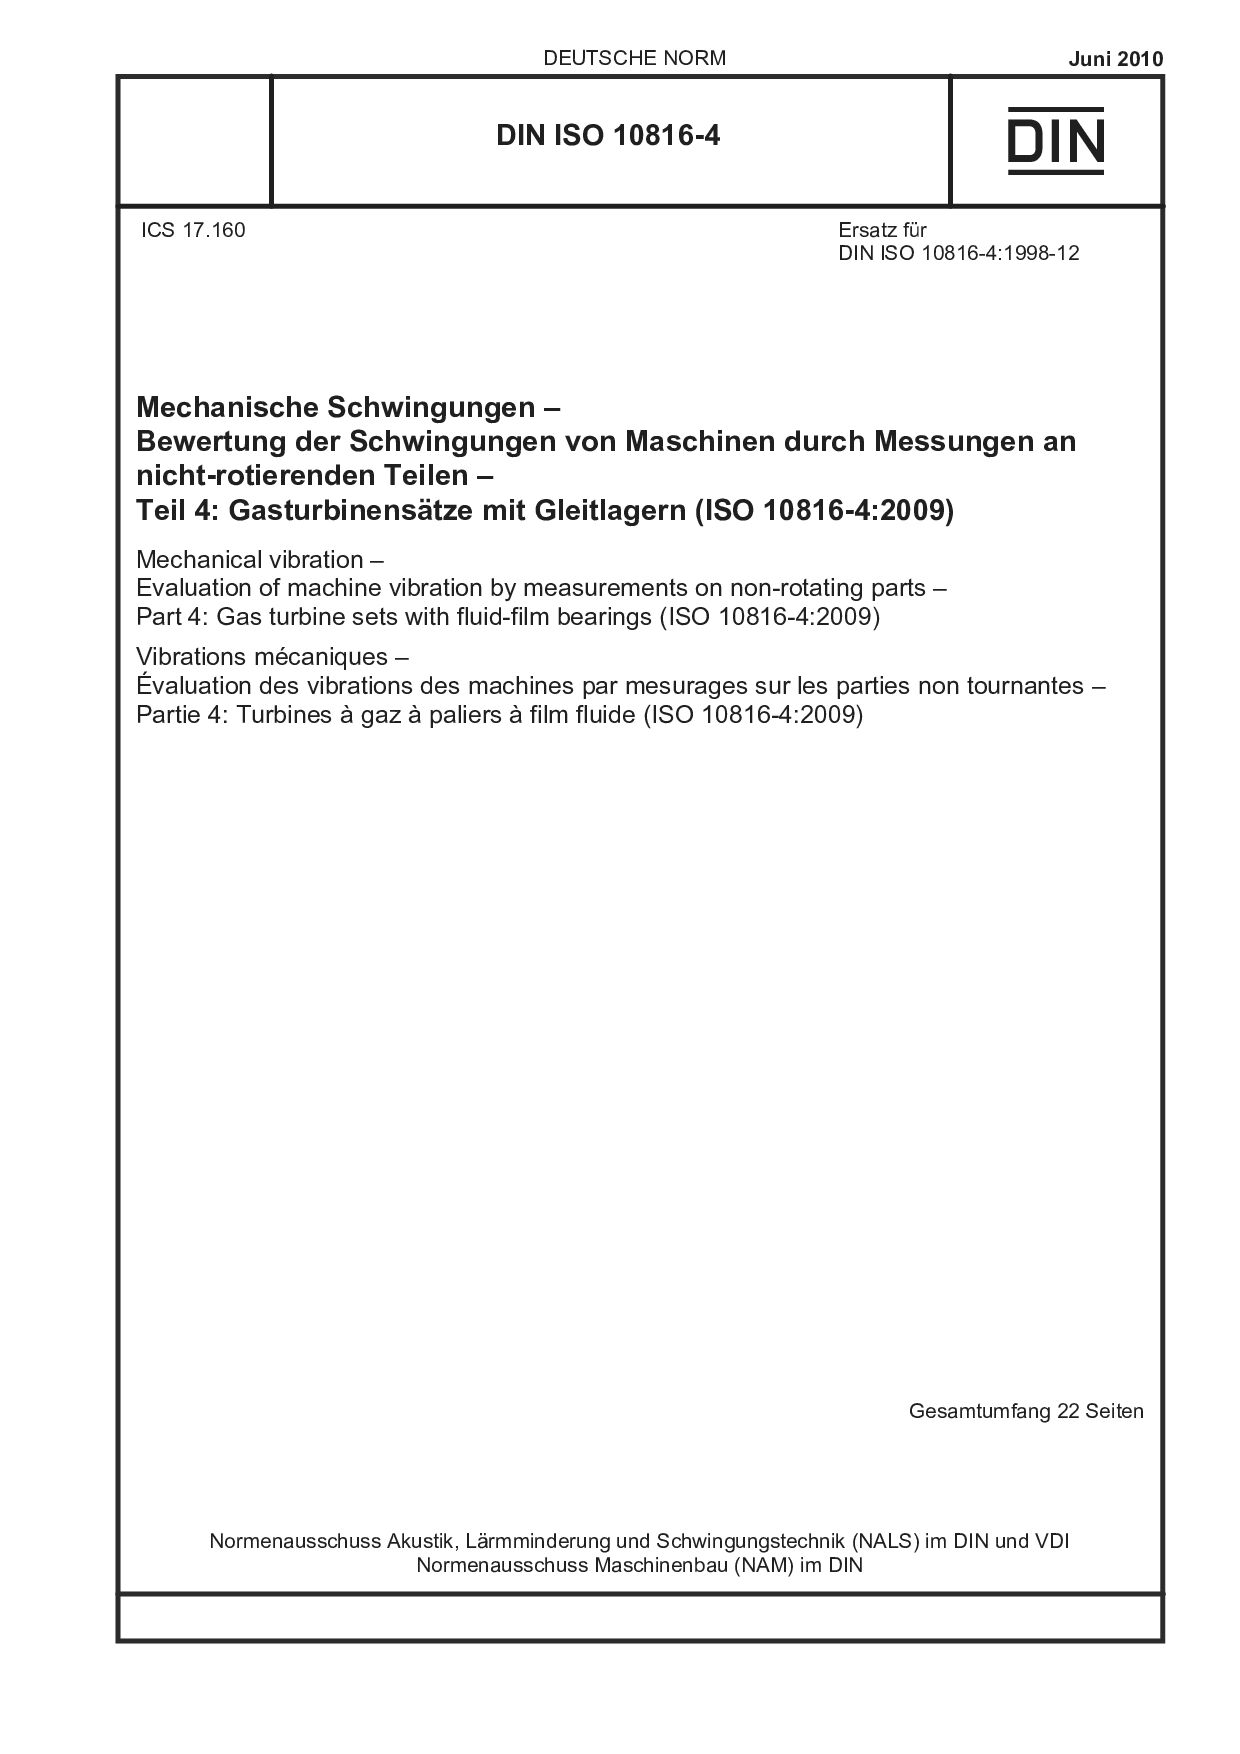 DIN ISO 10816-4:2010